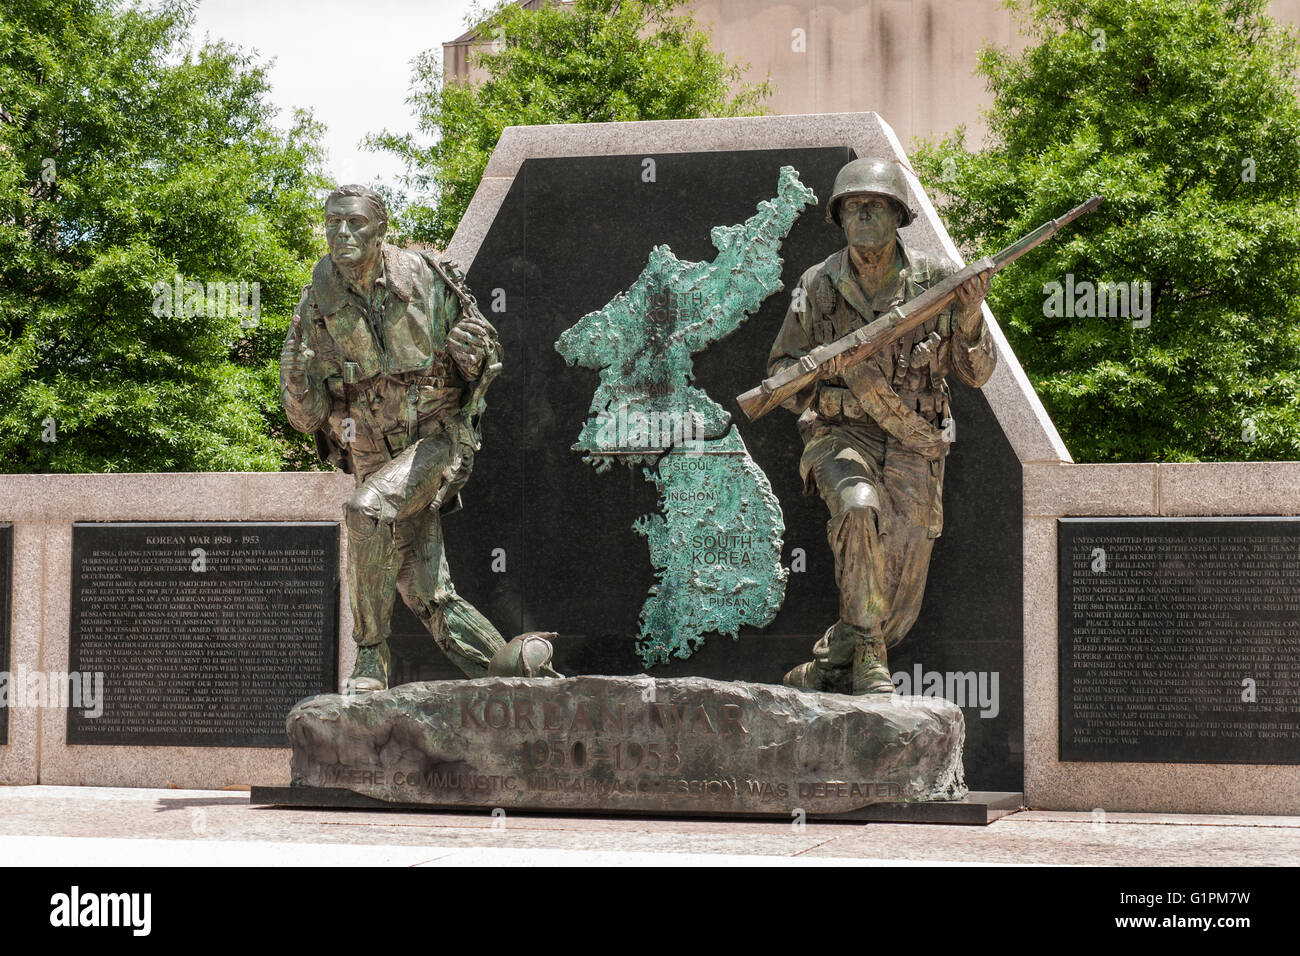 Korean War statue at the Legislative Plaza, Nashville, Tennessee Stock Photo